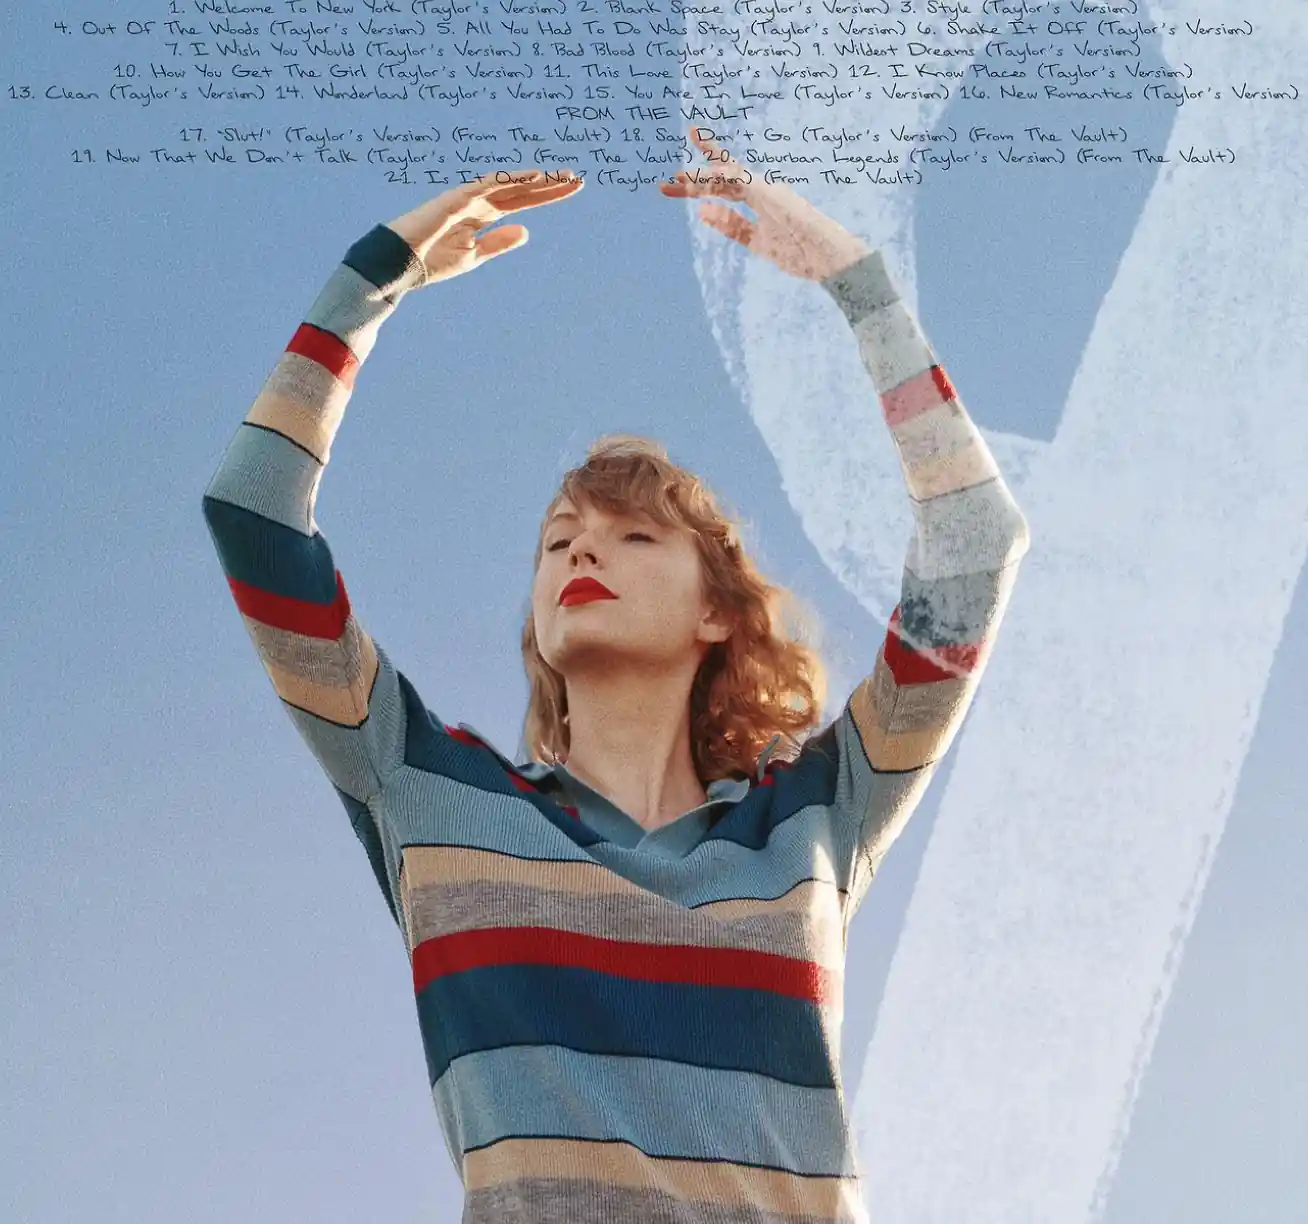 Fans Taylor Swift Mampu Pecahkan Teka-Teki dalam Album 1989 Taylor’s Version